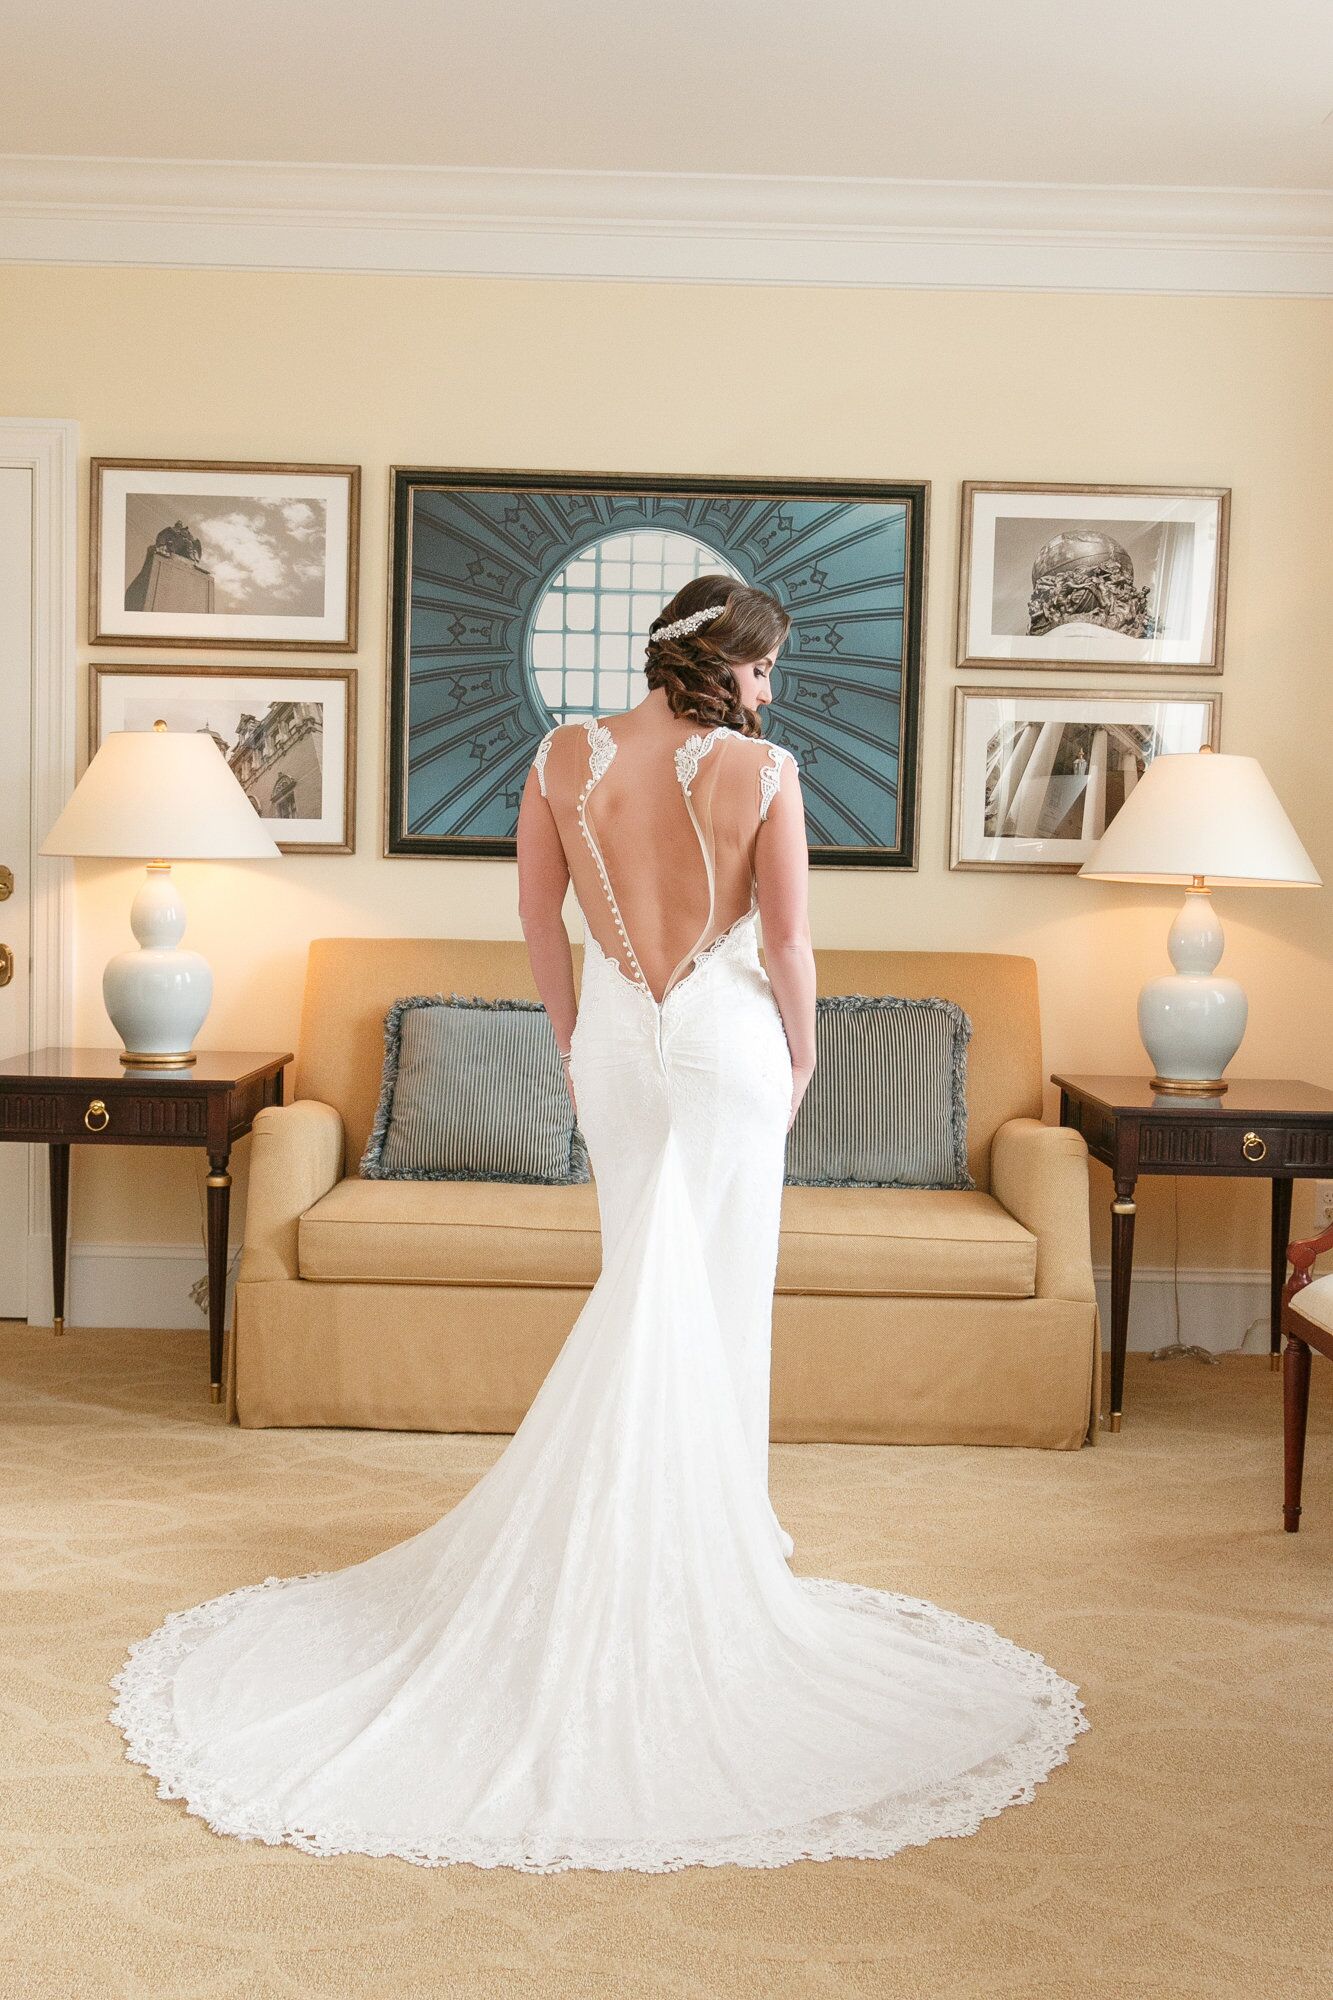 amandas wedding dress from behind